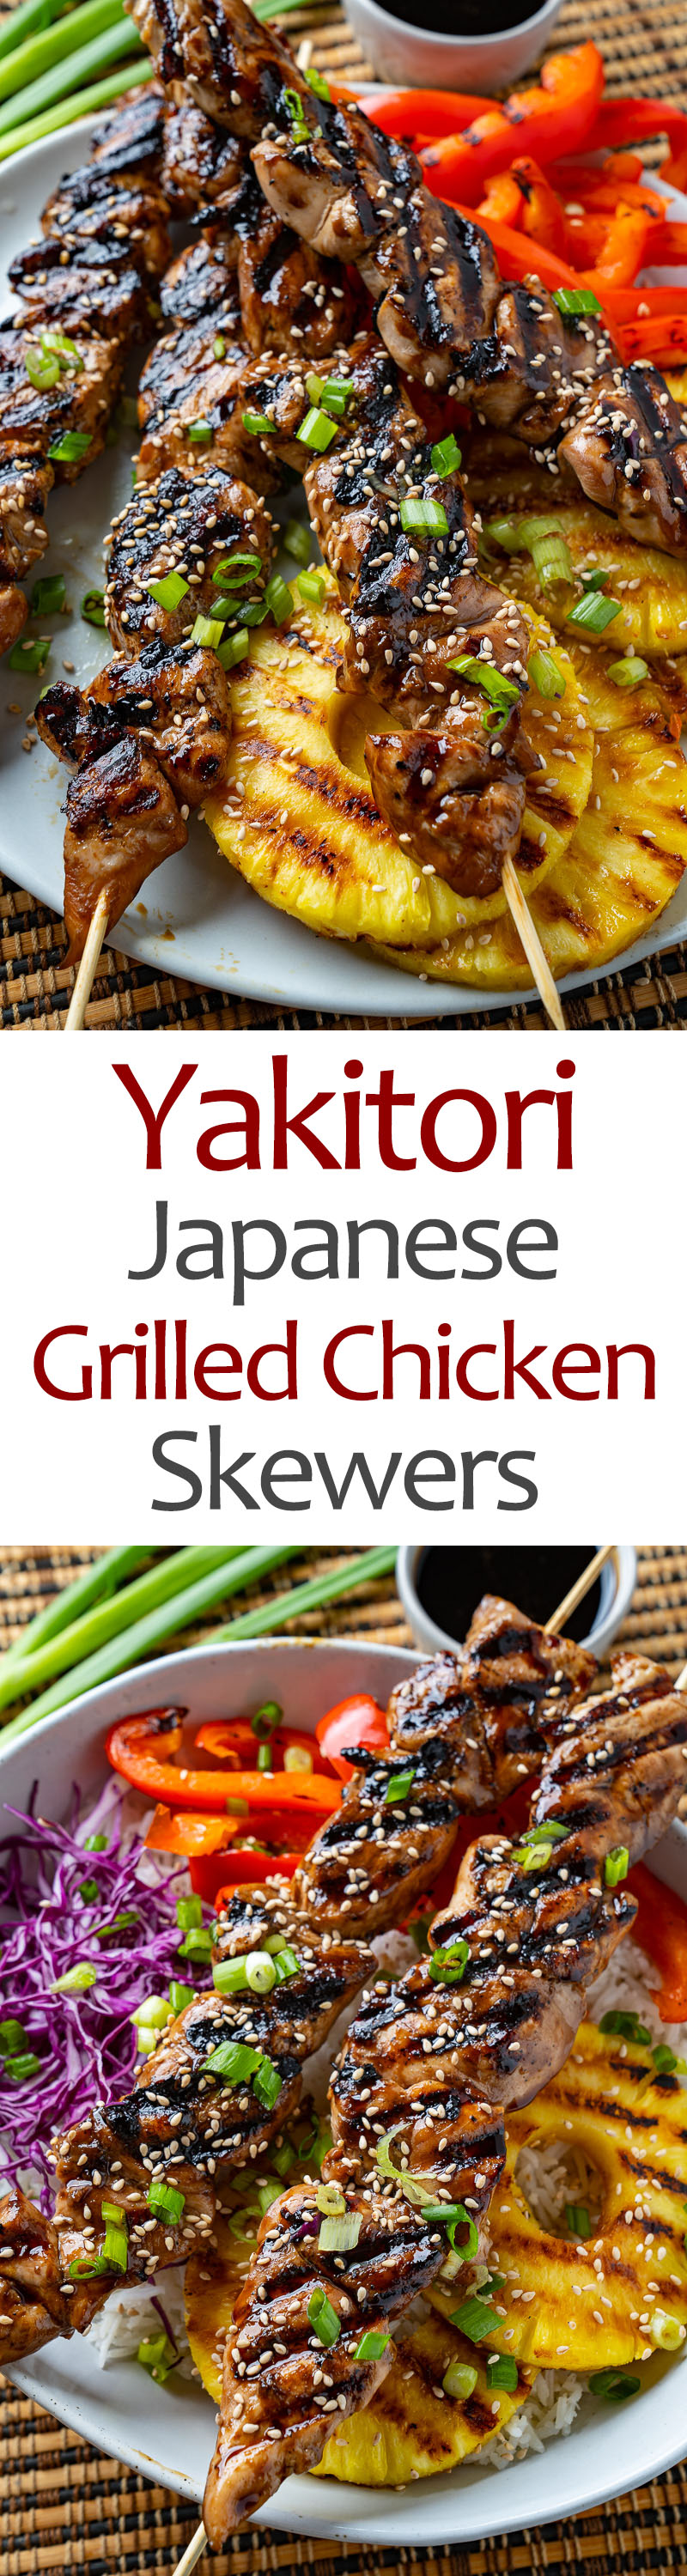 Yakitori (Japanese Grilled Chicken Skewers)